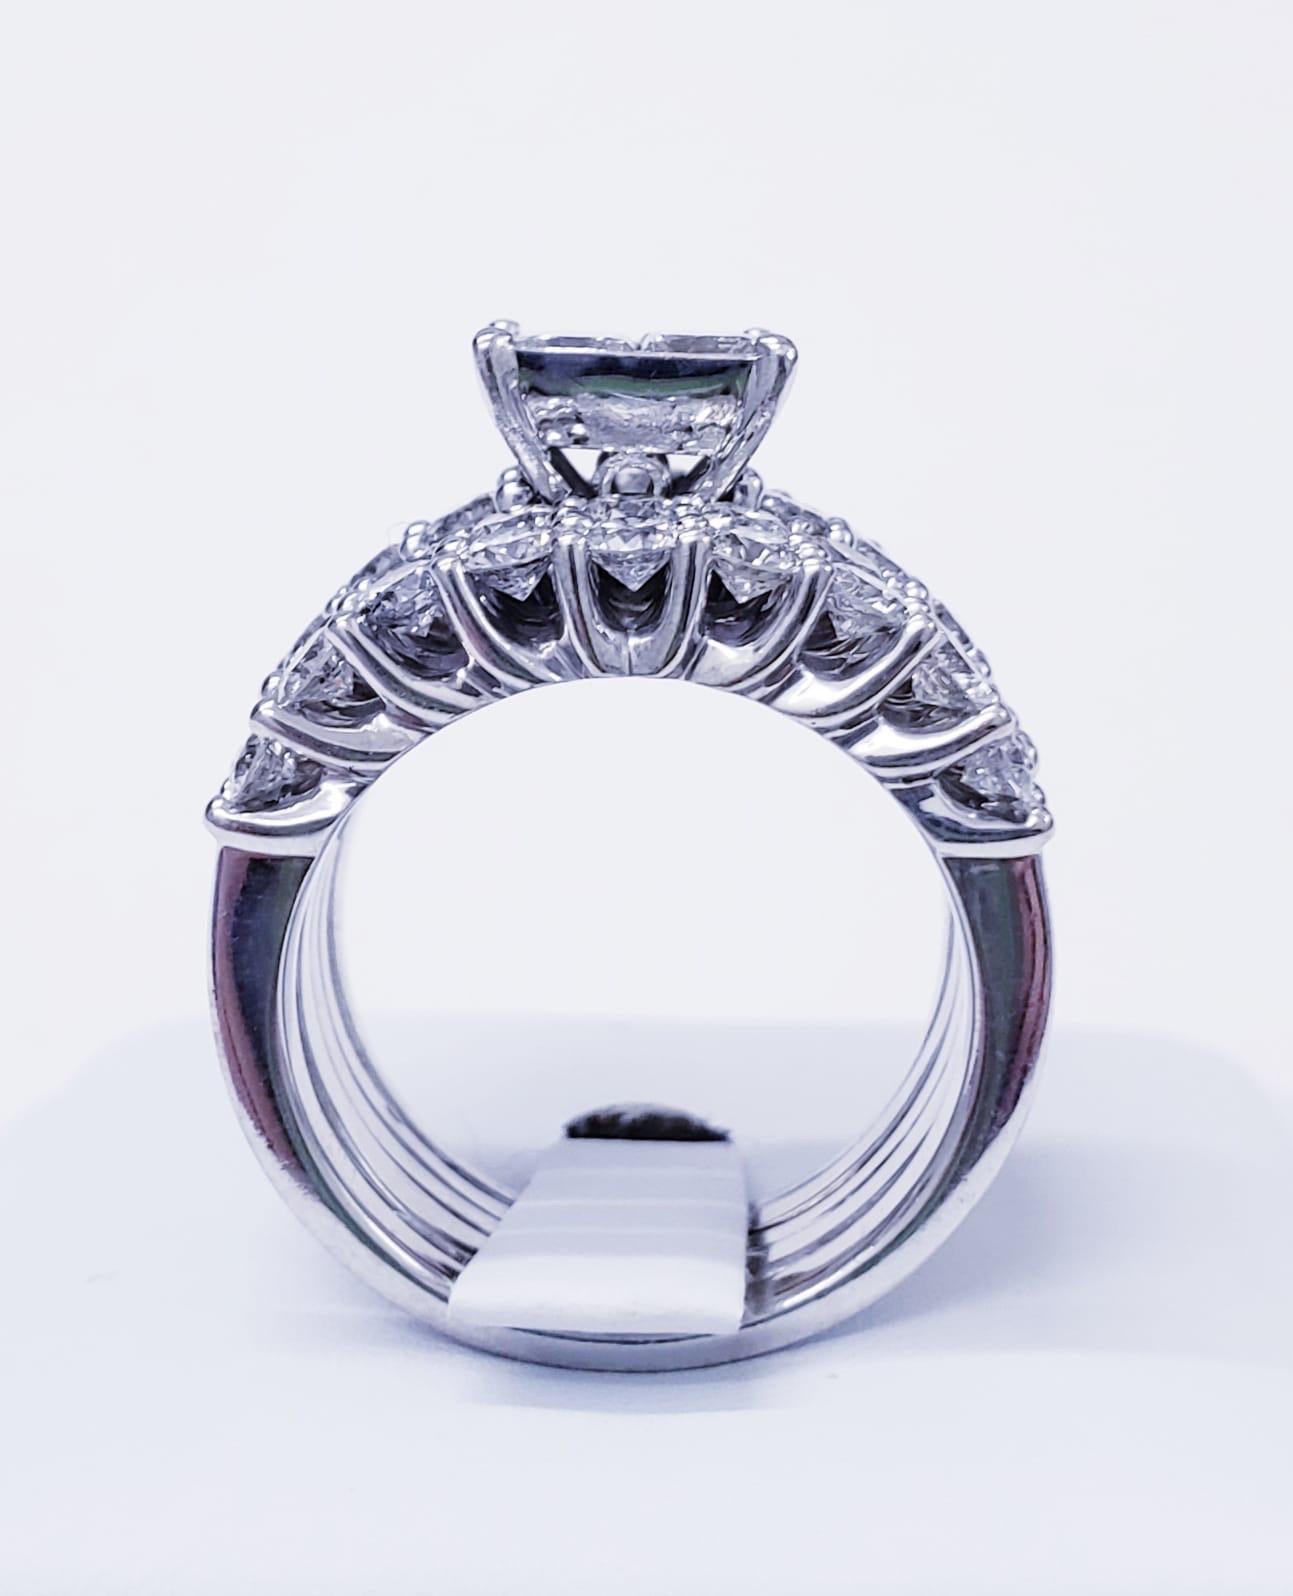 .9 carat diamond engagement ring